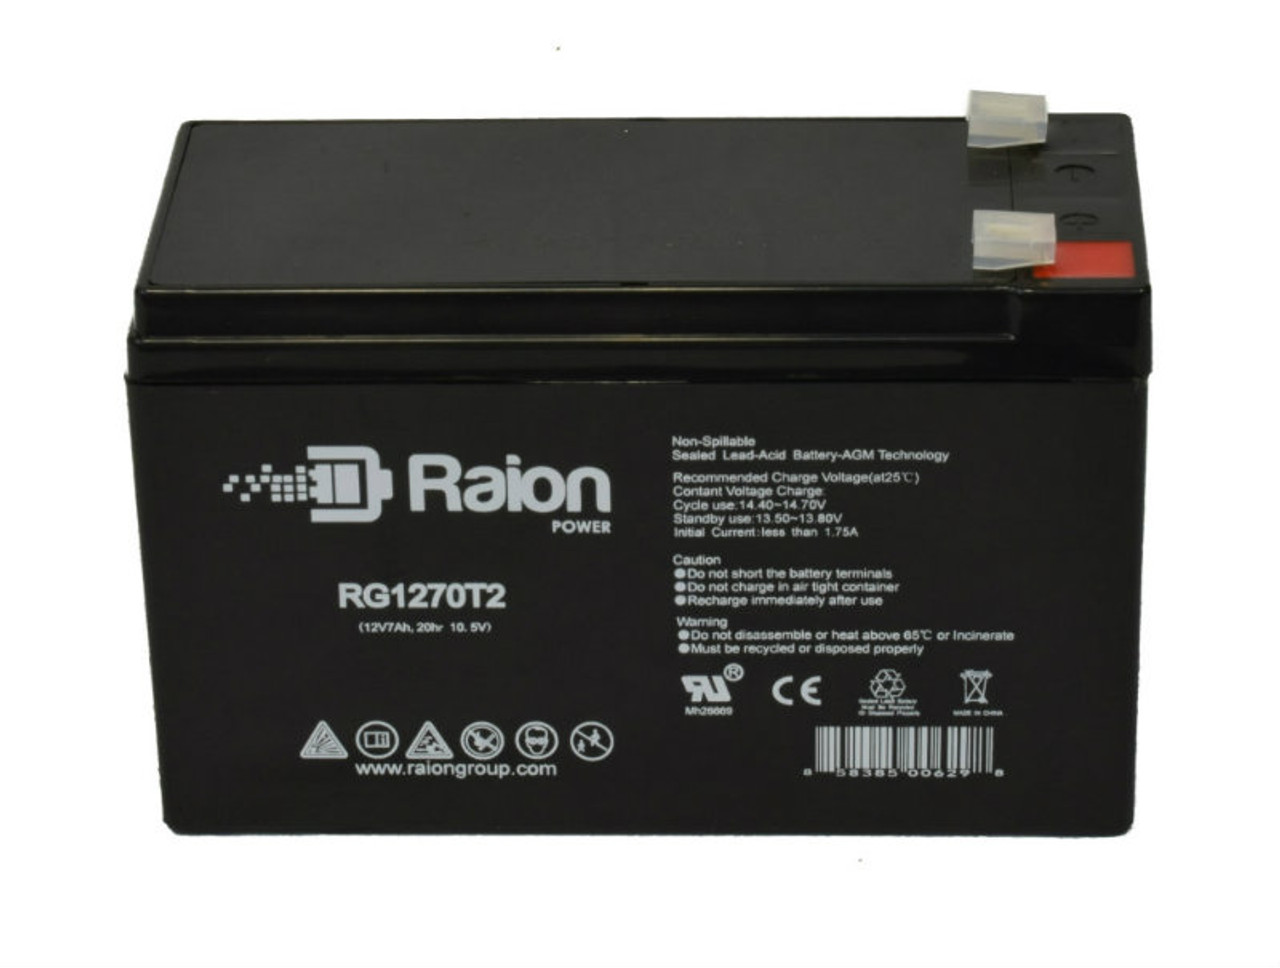 Raion Power RG1270T1 12V 7Ah Lead Acid Battery for Humminbird 597ci Combo Fish Finder